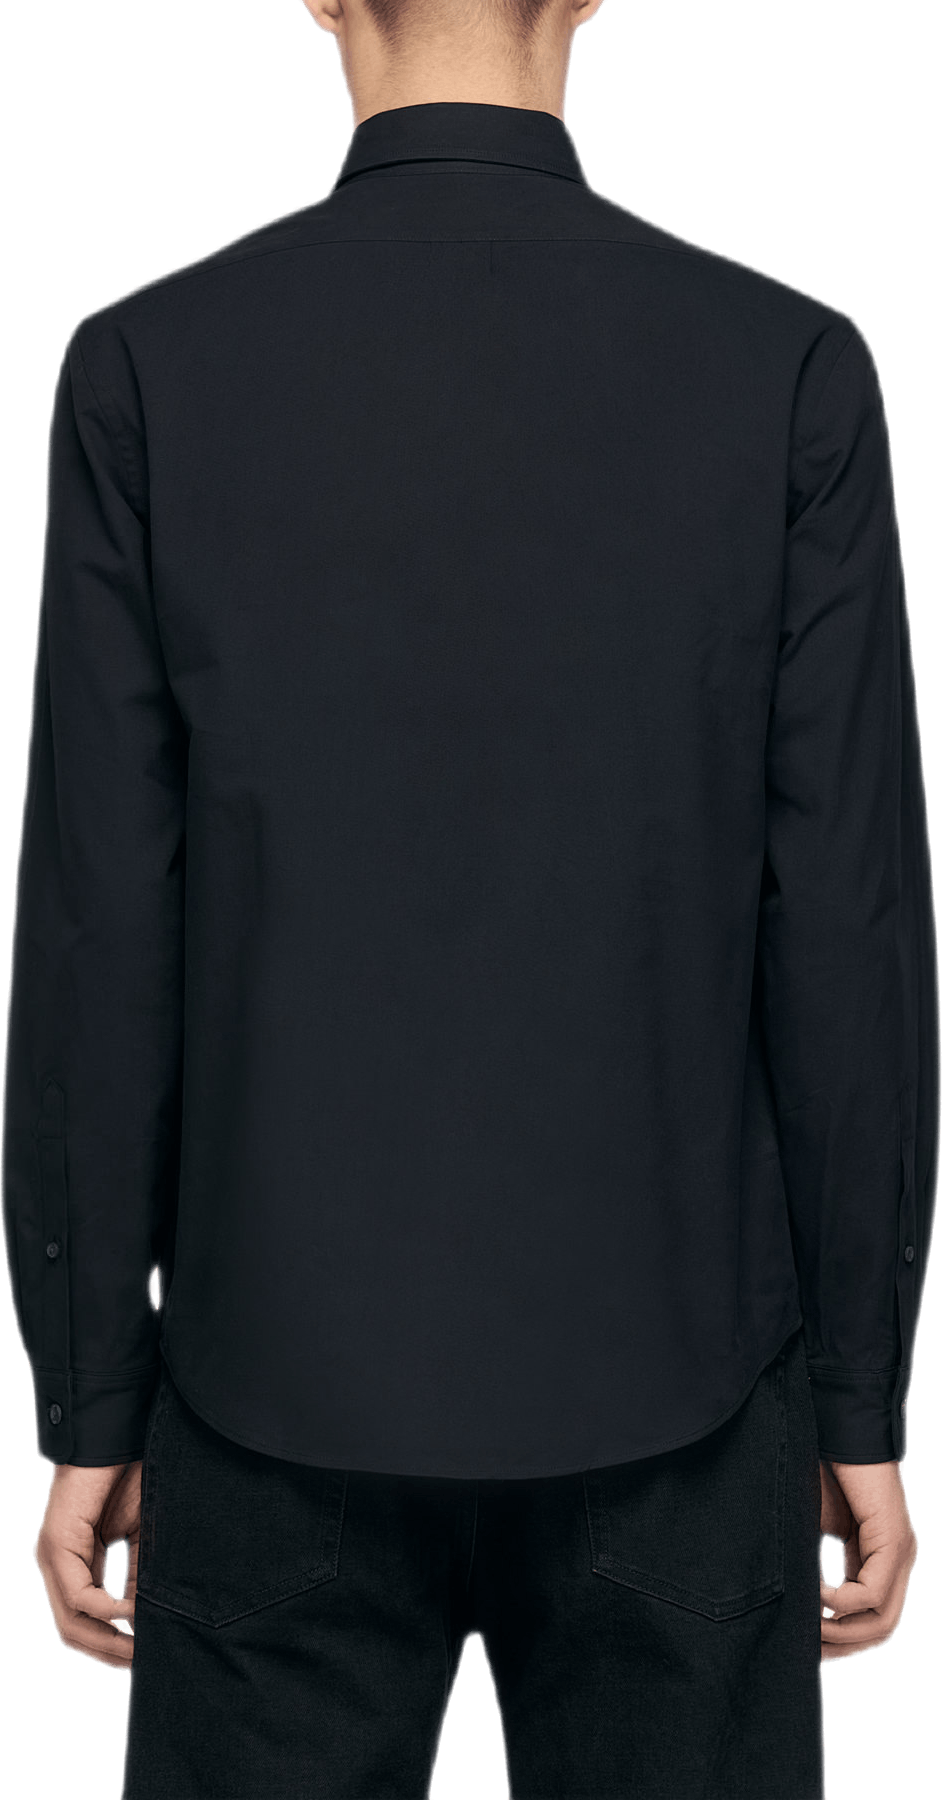 Tiger Casual Shirt Black